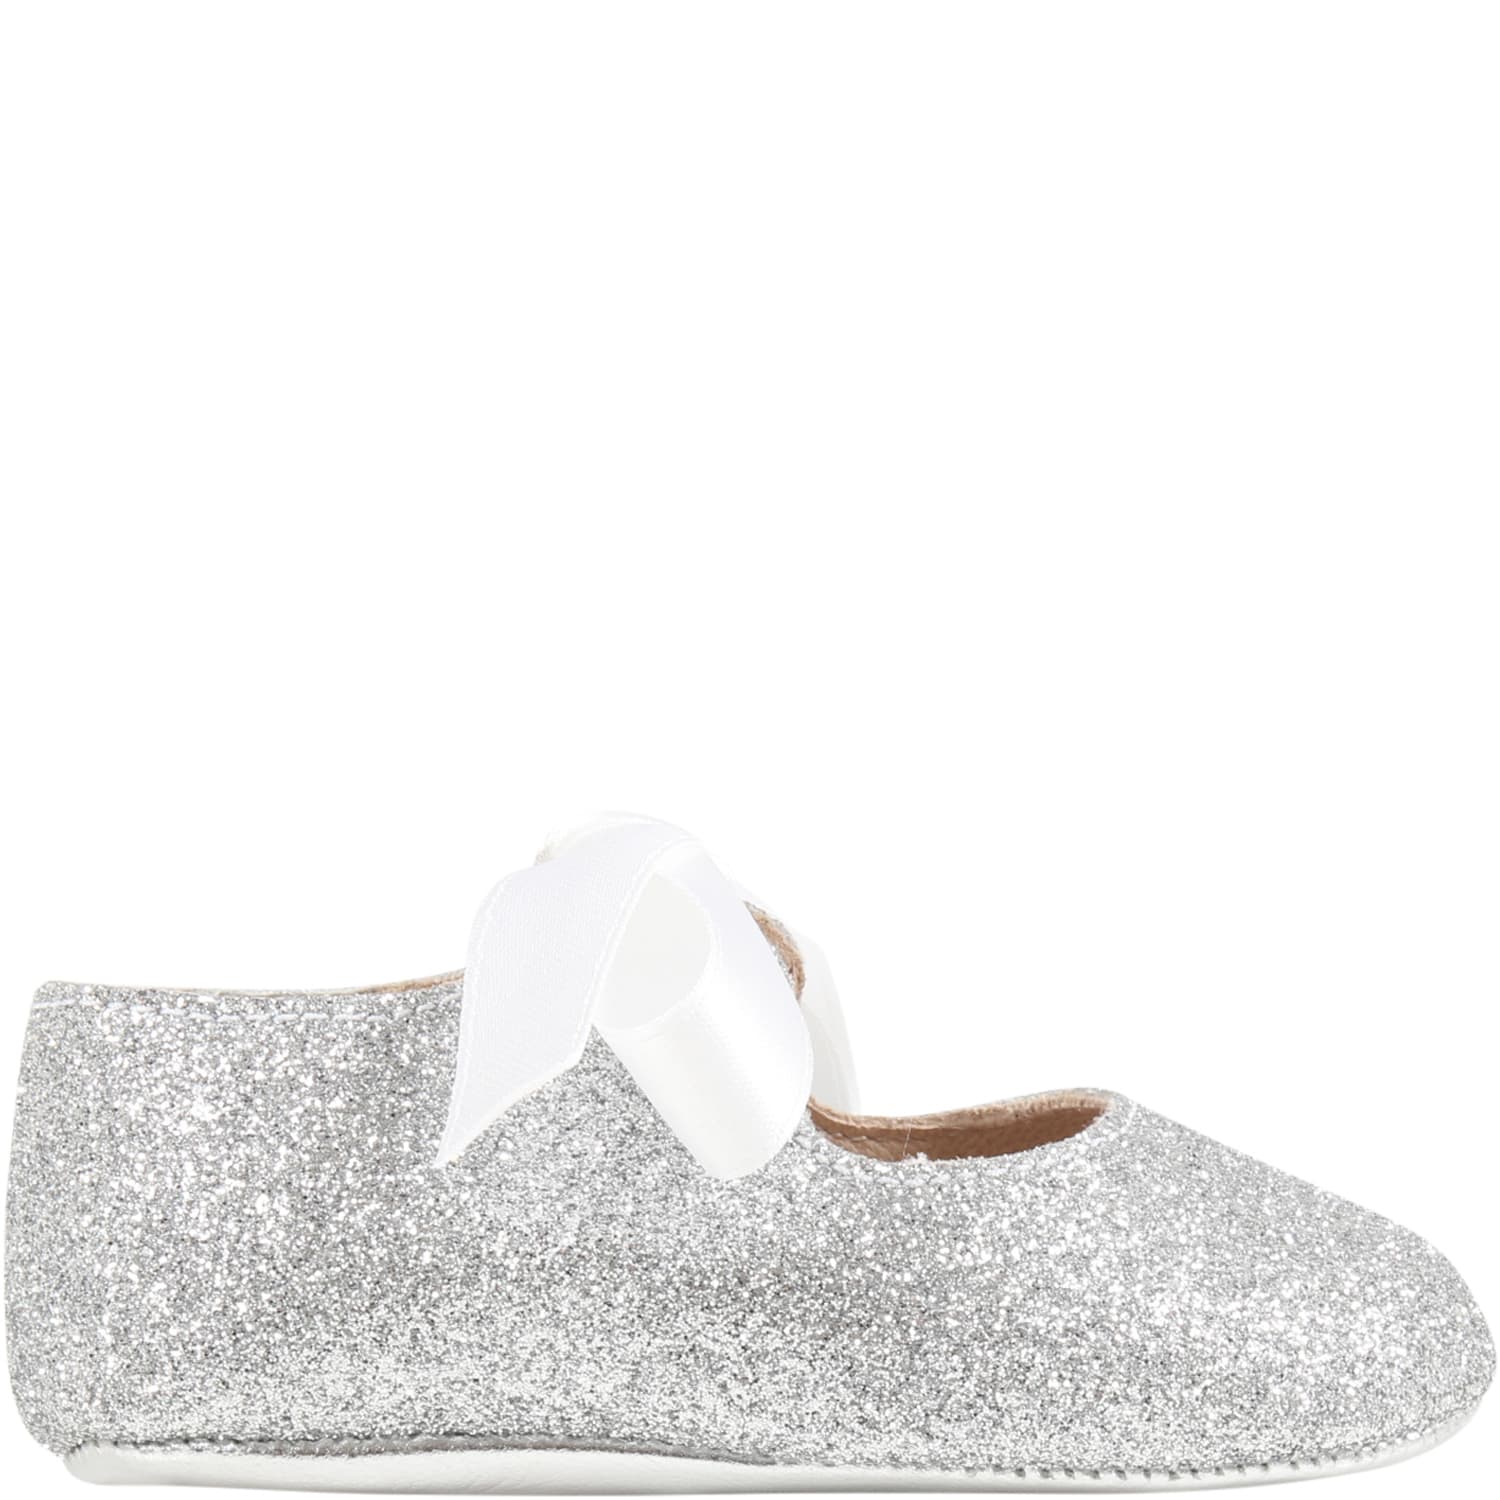 Gallucci Silver Ballerina Shoes For Babygirl